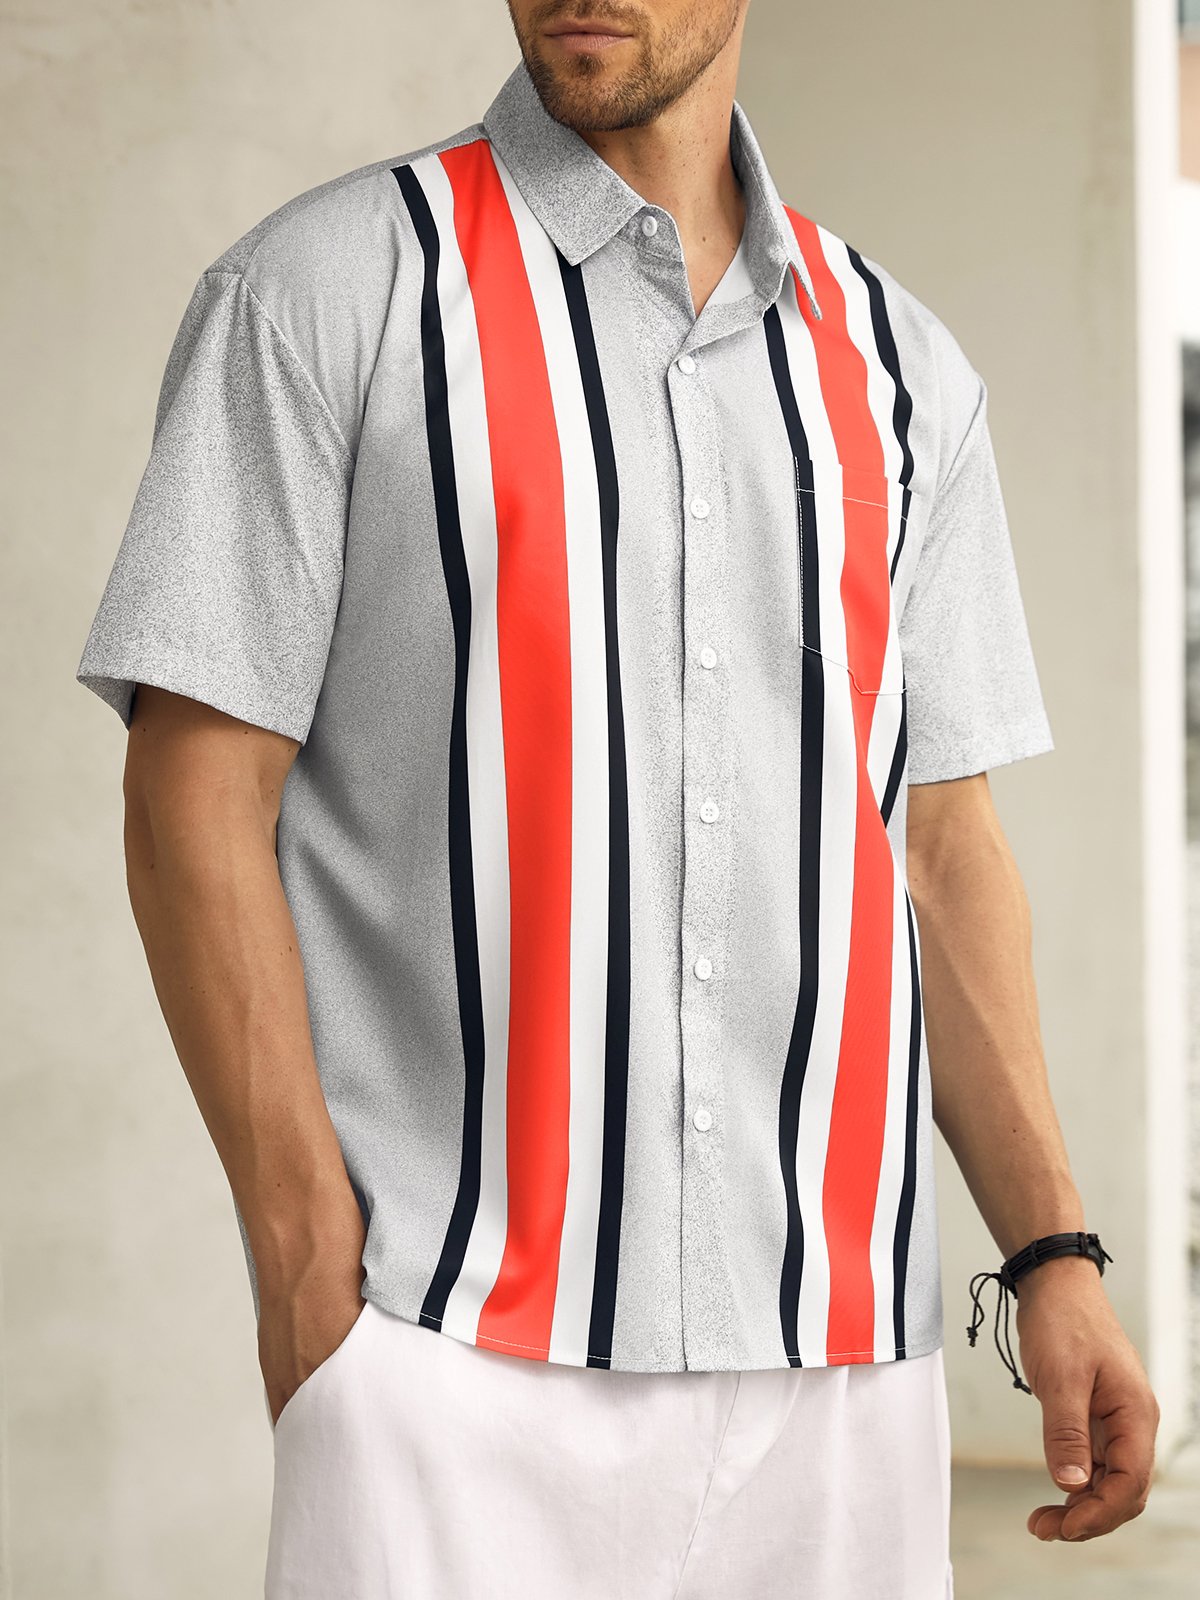 Hardaddy Striped Chest Pocket Short Sleeve Bowling Shirt